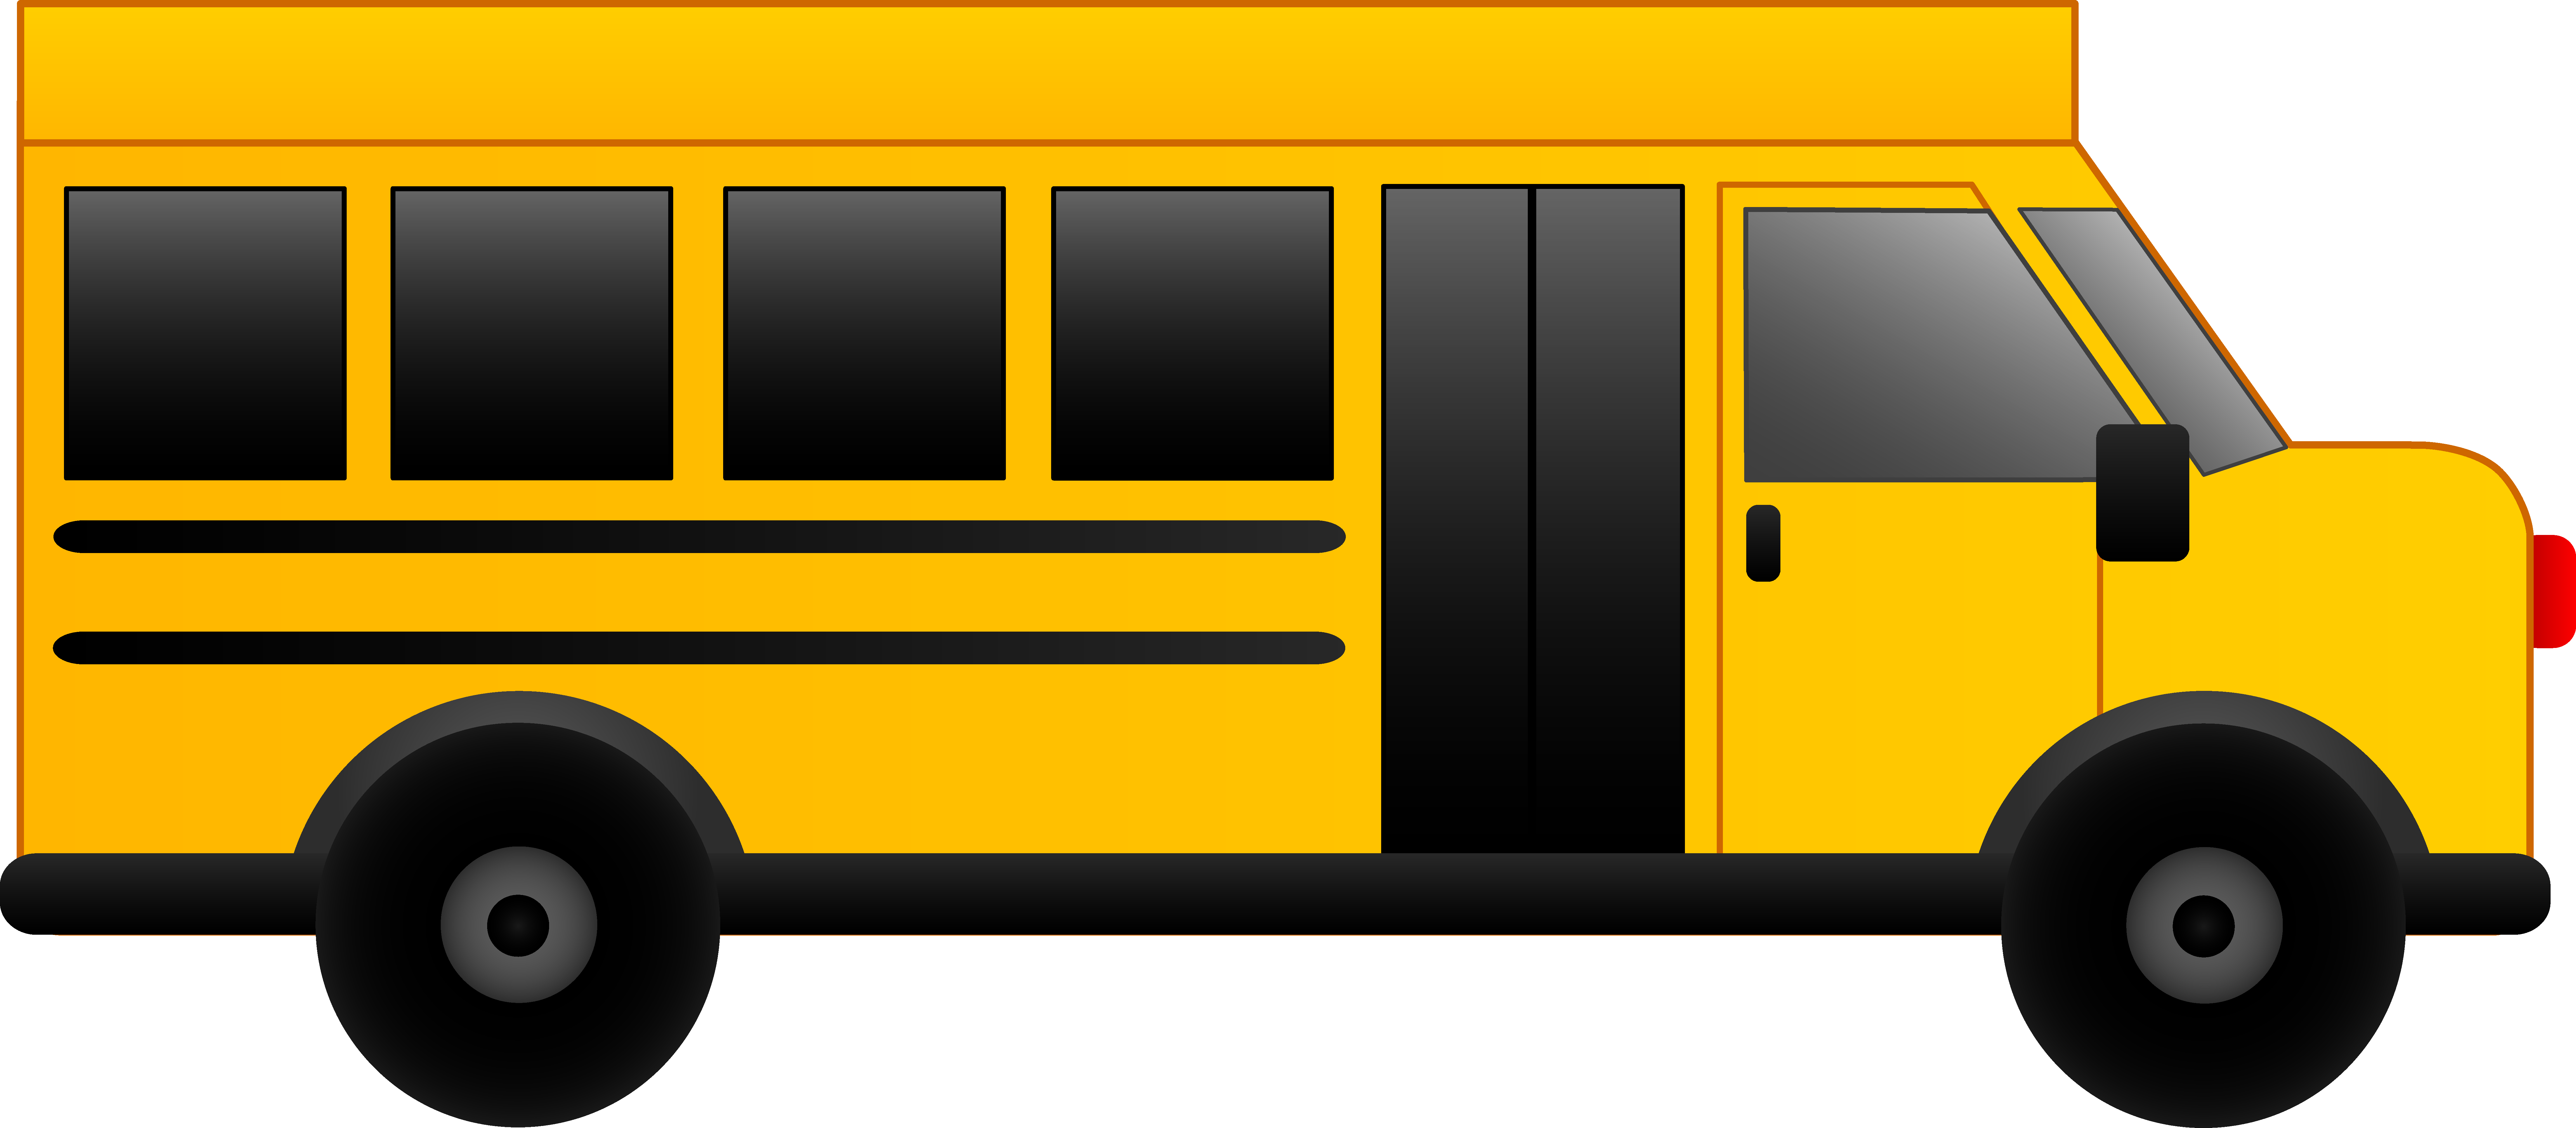 Cartoon School Buses - Cliparts.co